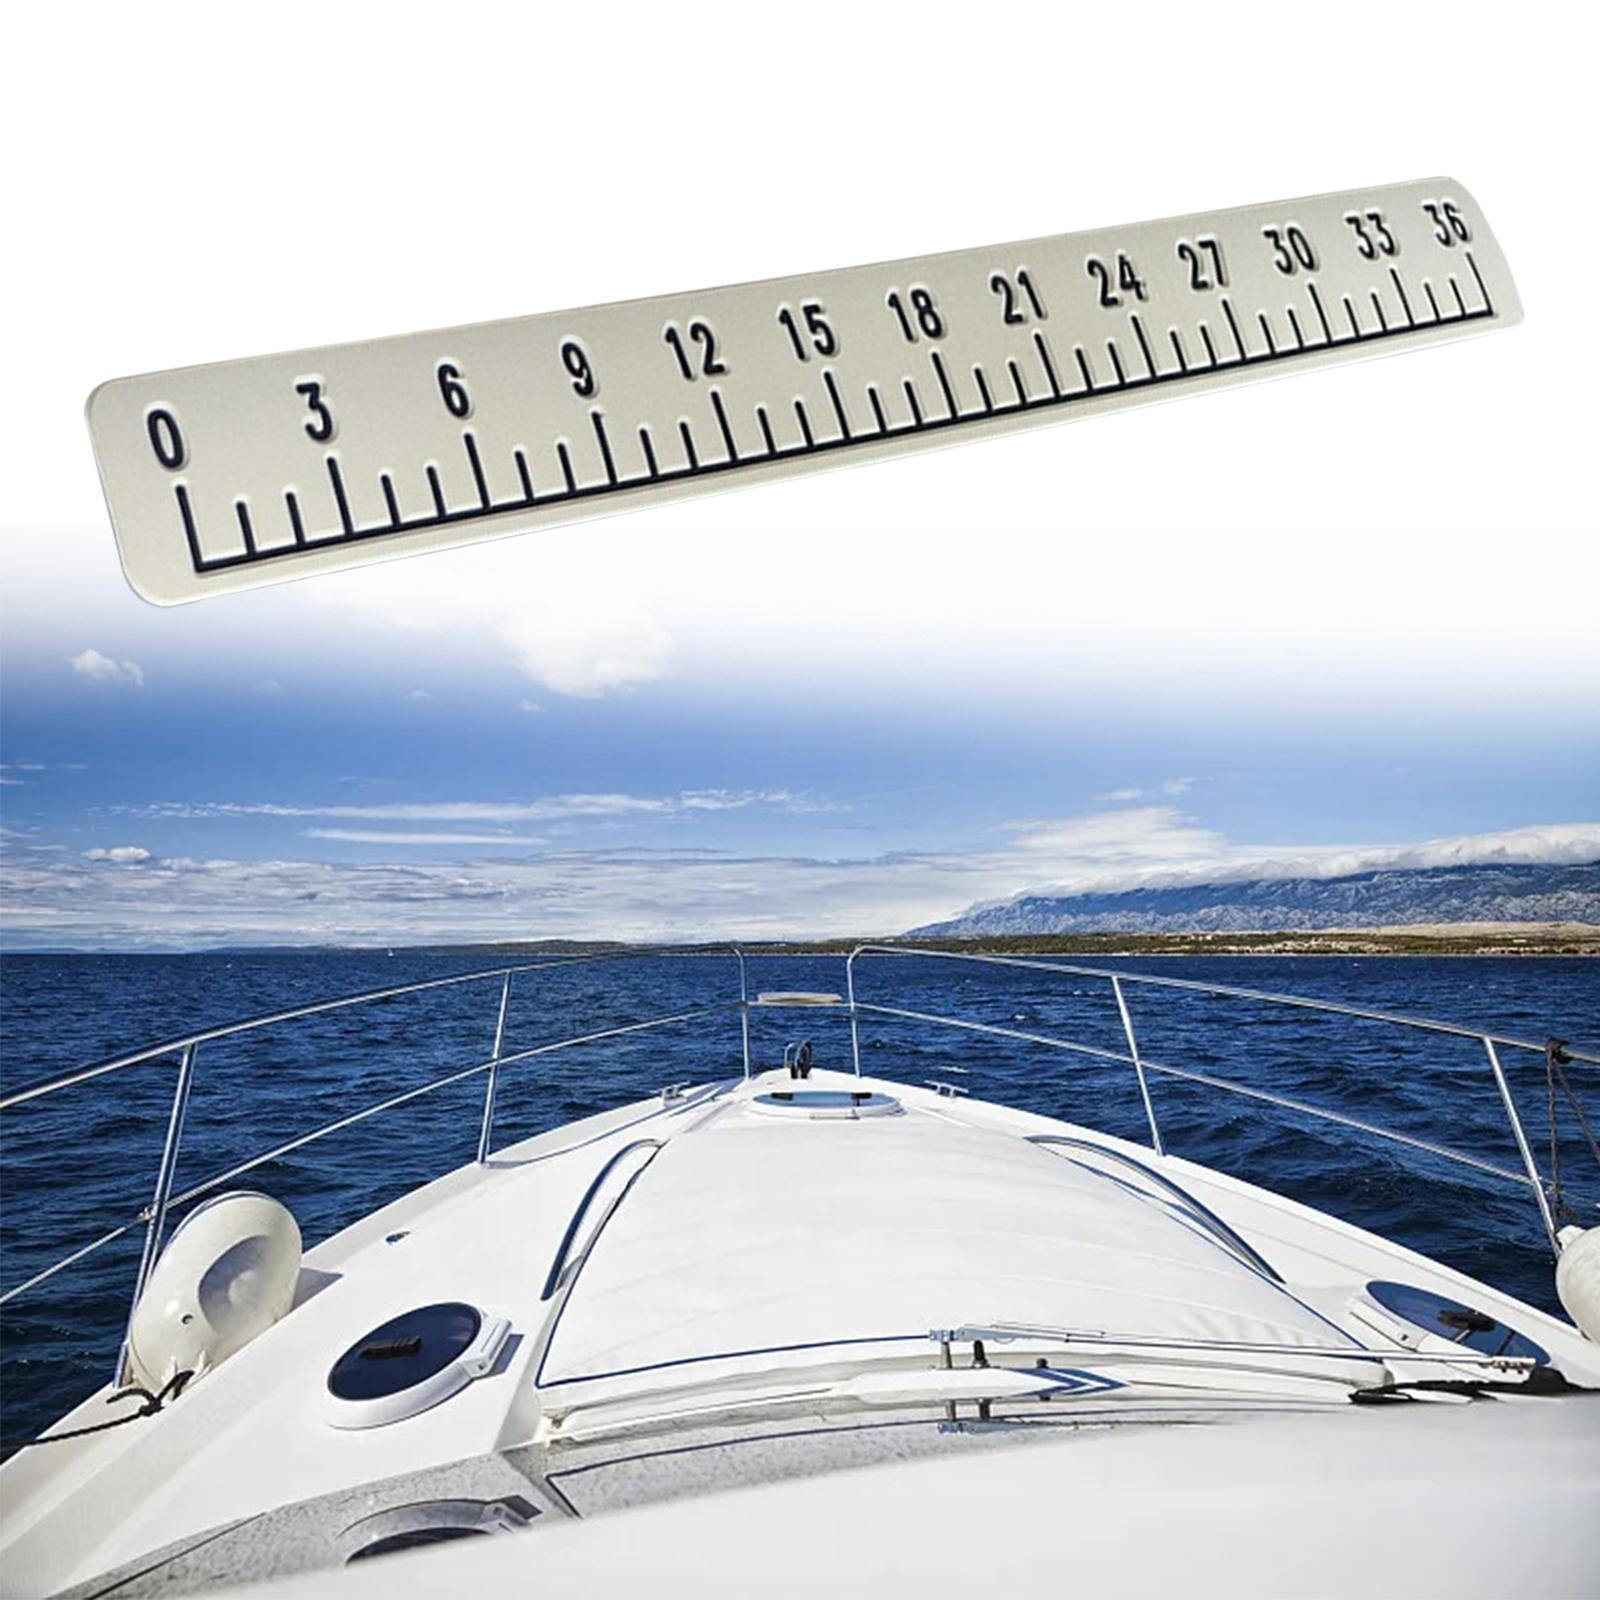 120cm Waterproof Fish Measuring Tape For Kayaks Boat Catch Measurement